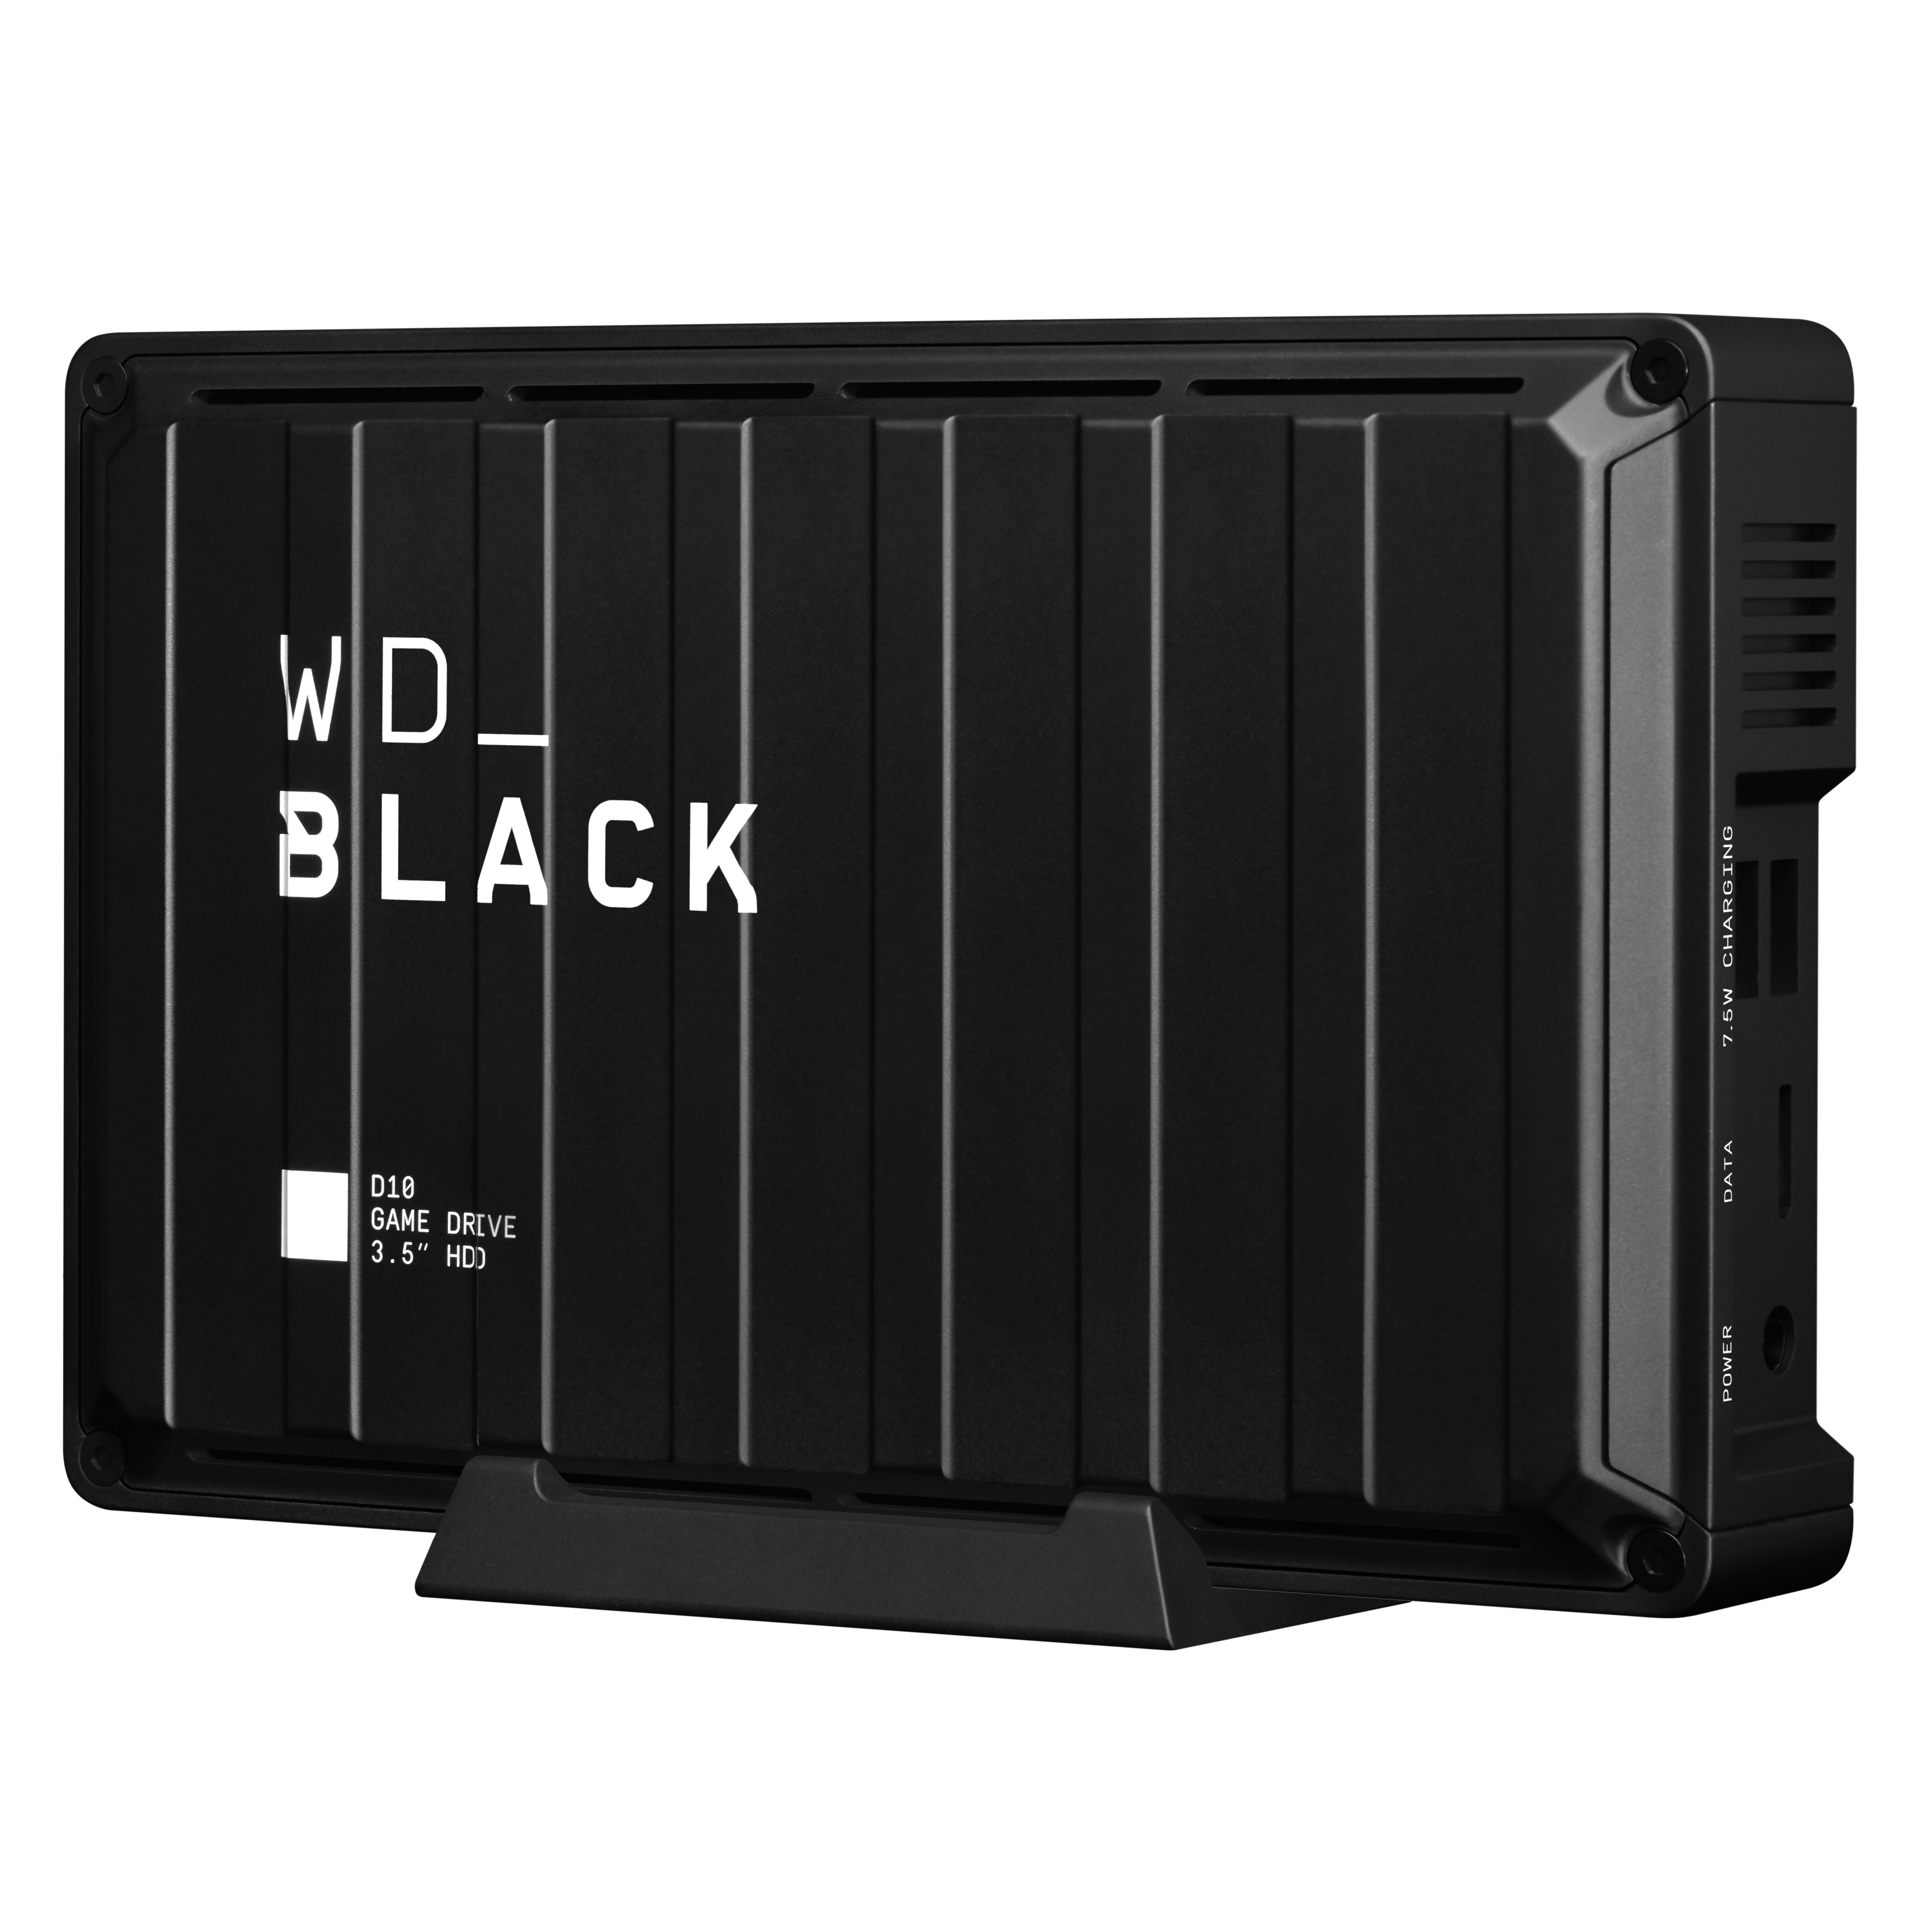 WD_BLACK™ D10 Game TB, 3,5 8 Gaming-Festplatte, Schwarz/Weiß Drive Zoll